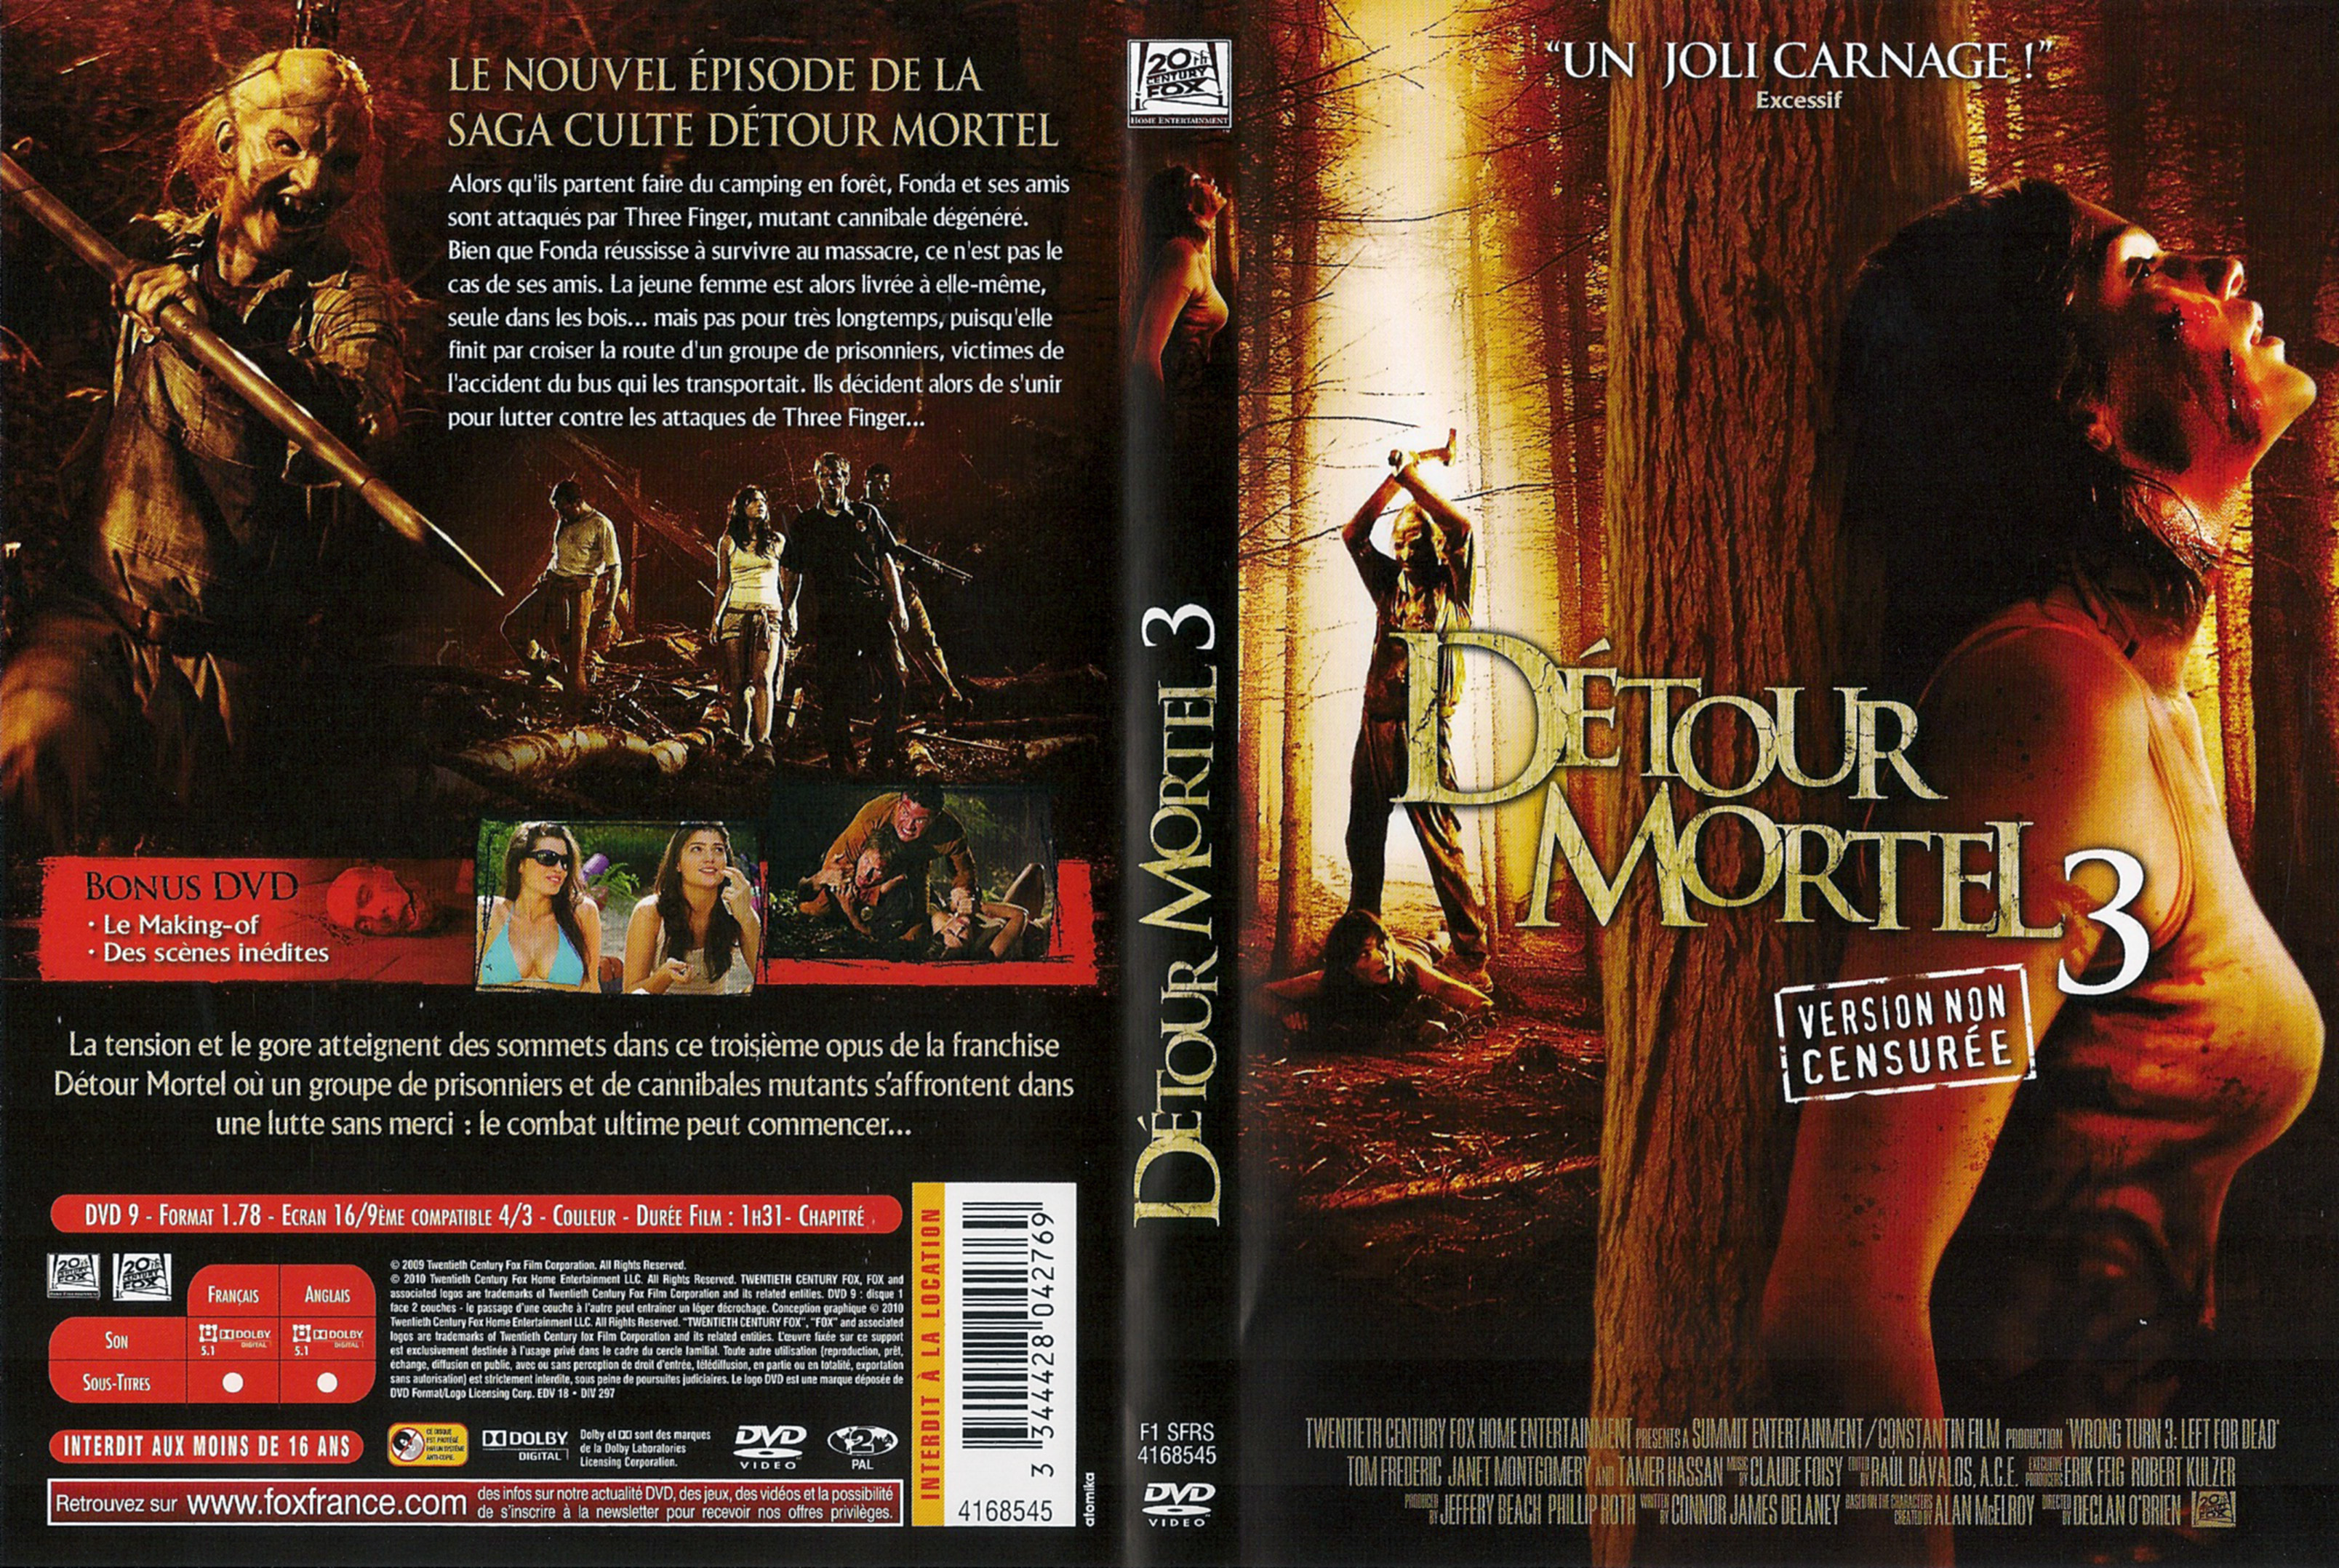 Jaquette DVD Dtour mortel 3 v2